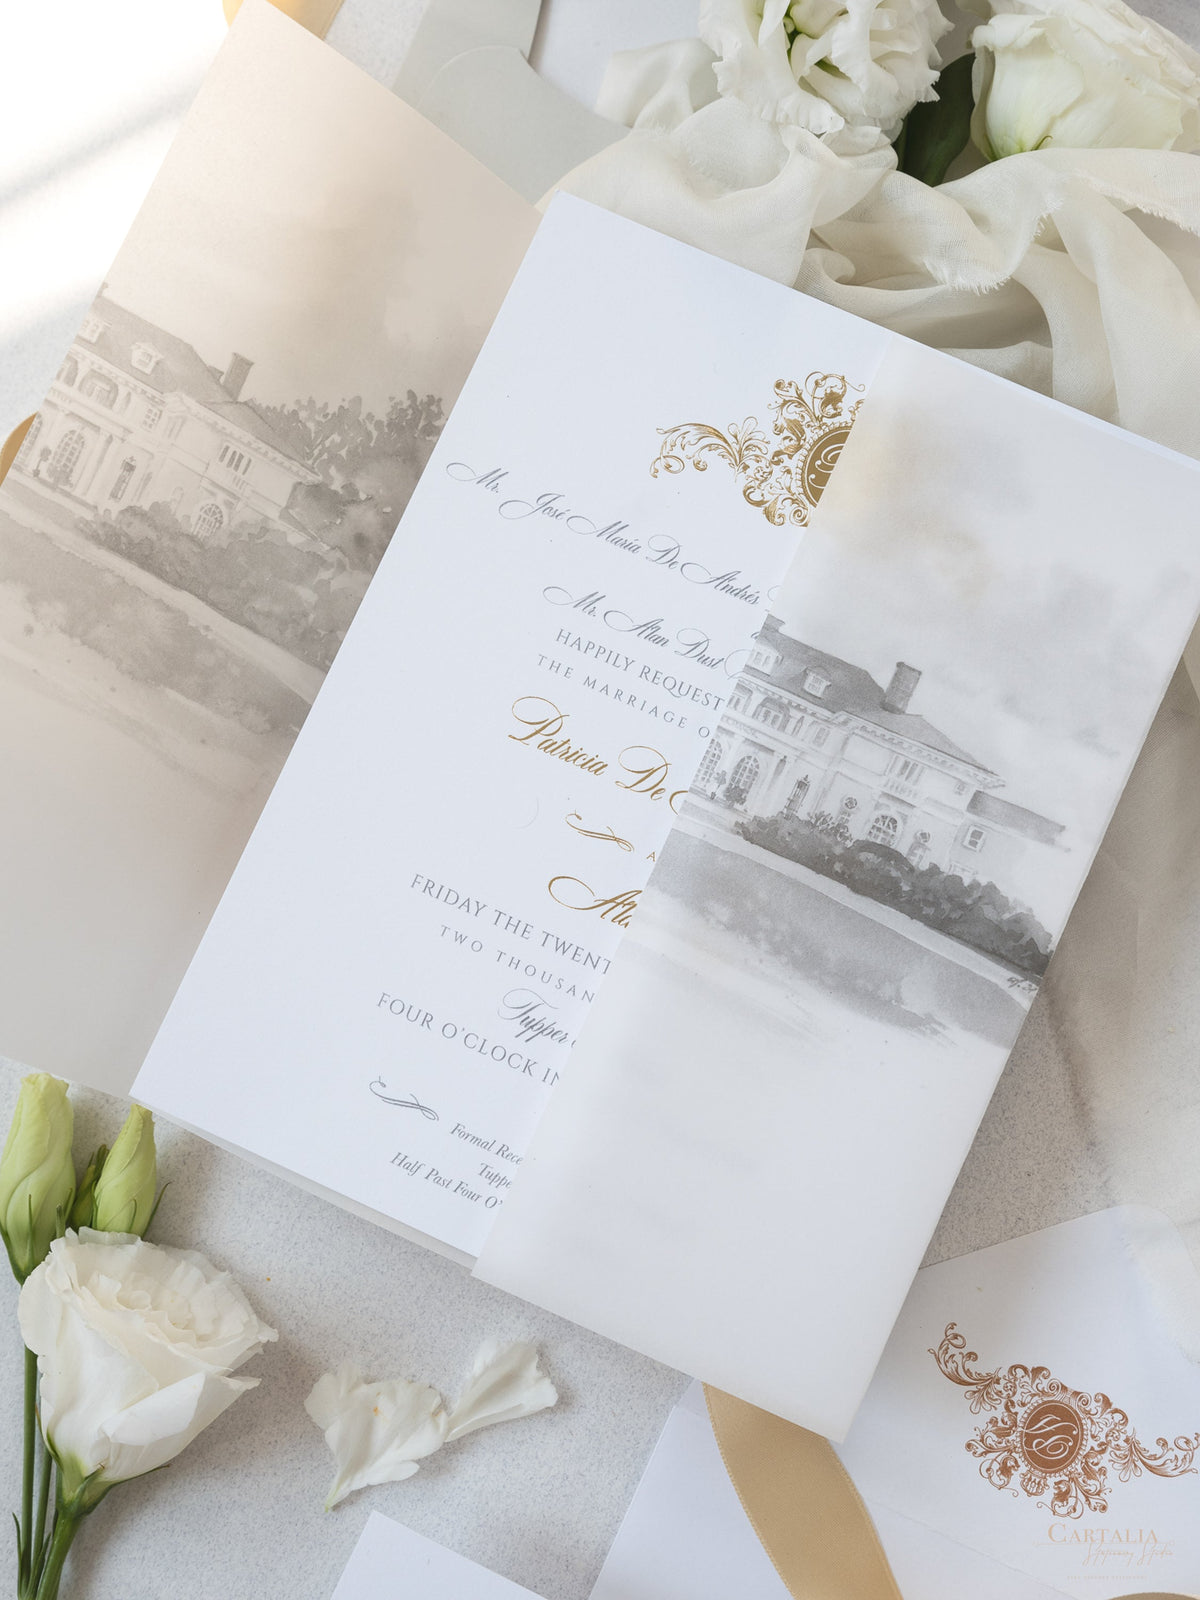 Watercolour Your Venue invitation on Vellum with Wax Seal Wedding invitation Suite | SAMPLE